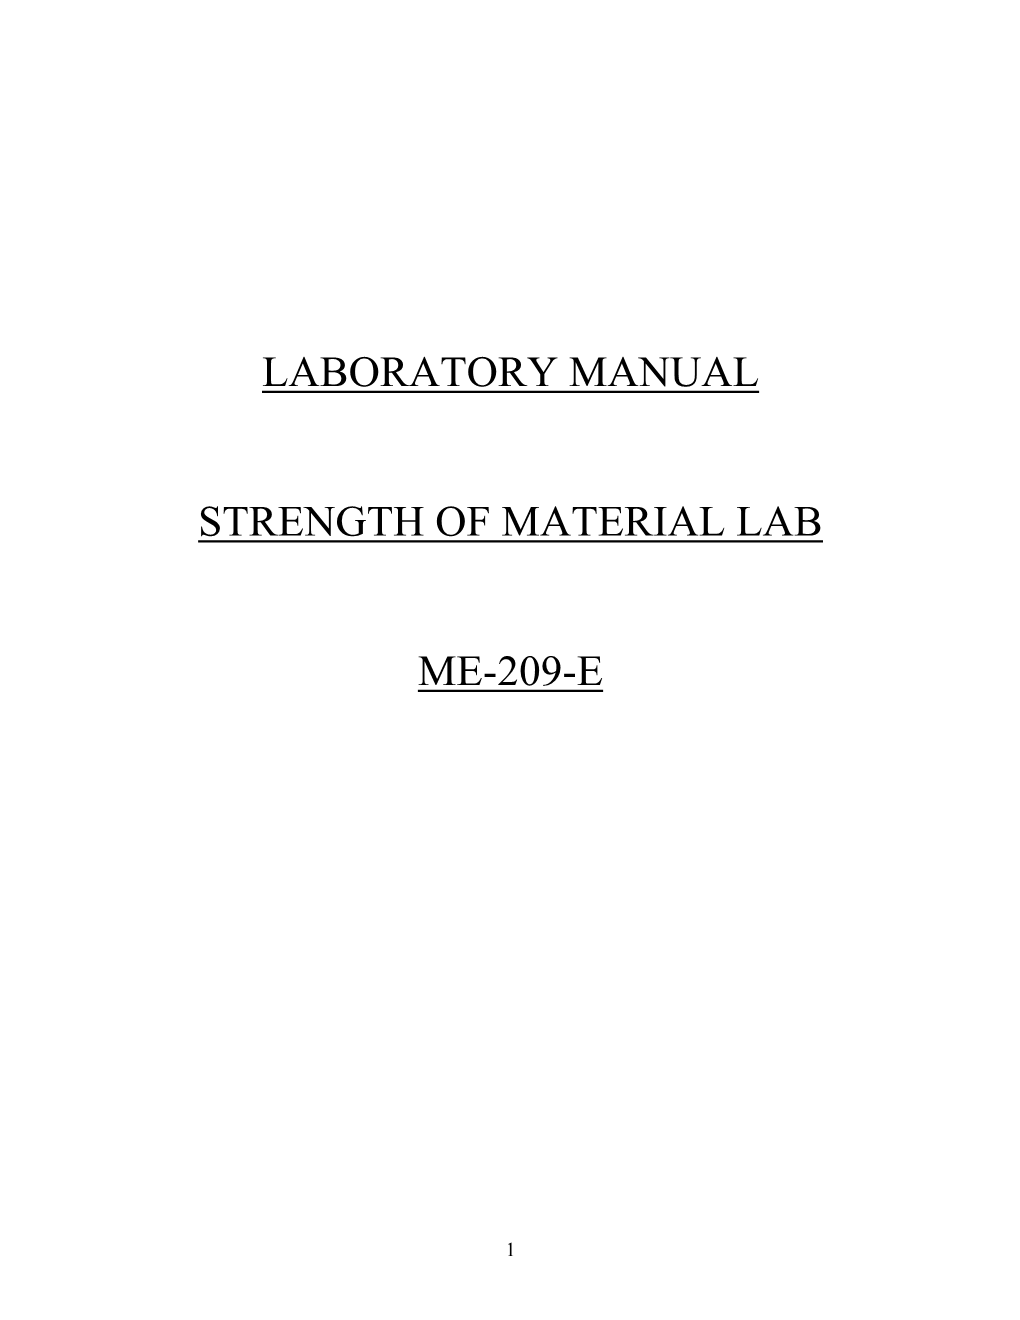 Laboratory Manual Strength of Material Lab Me-209-E